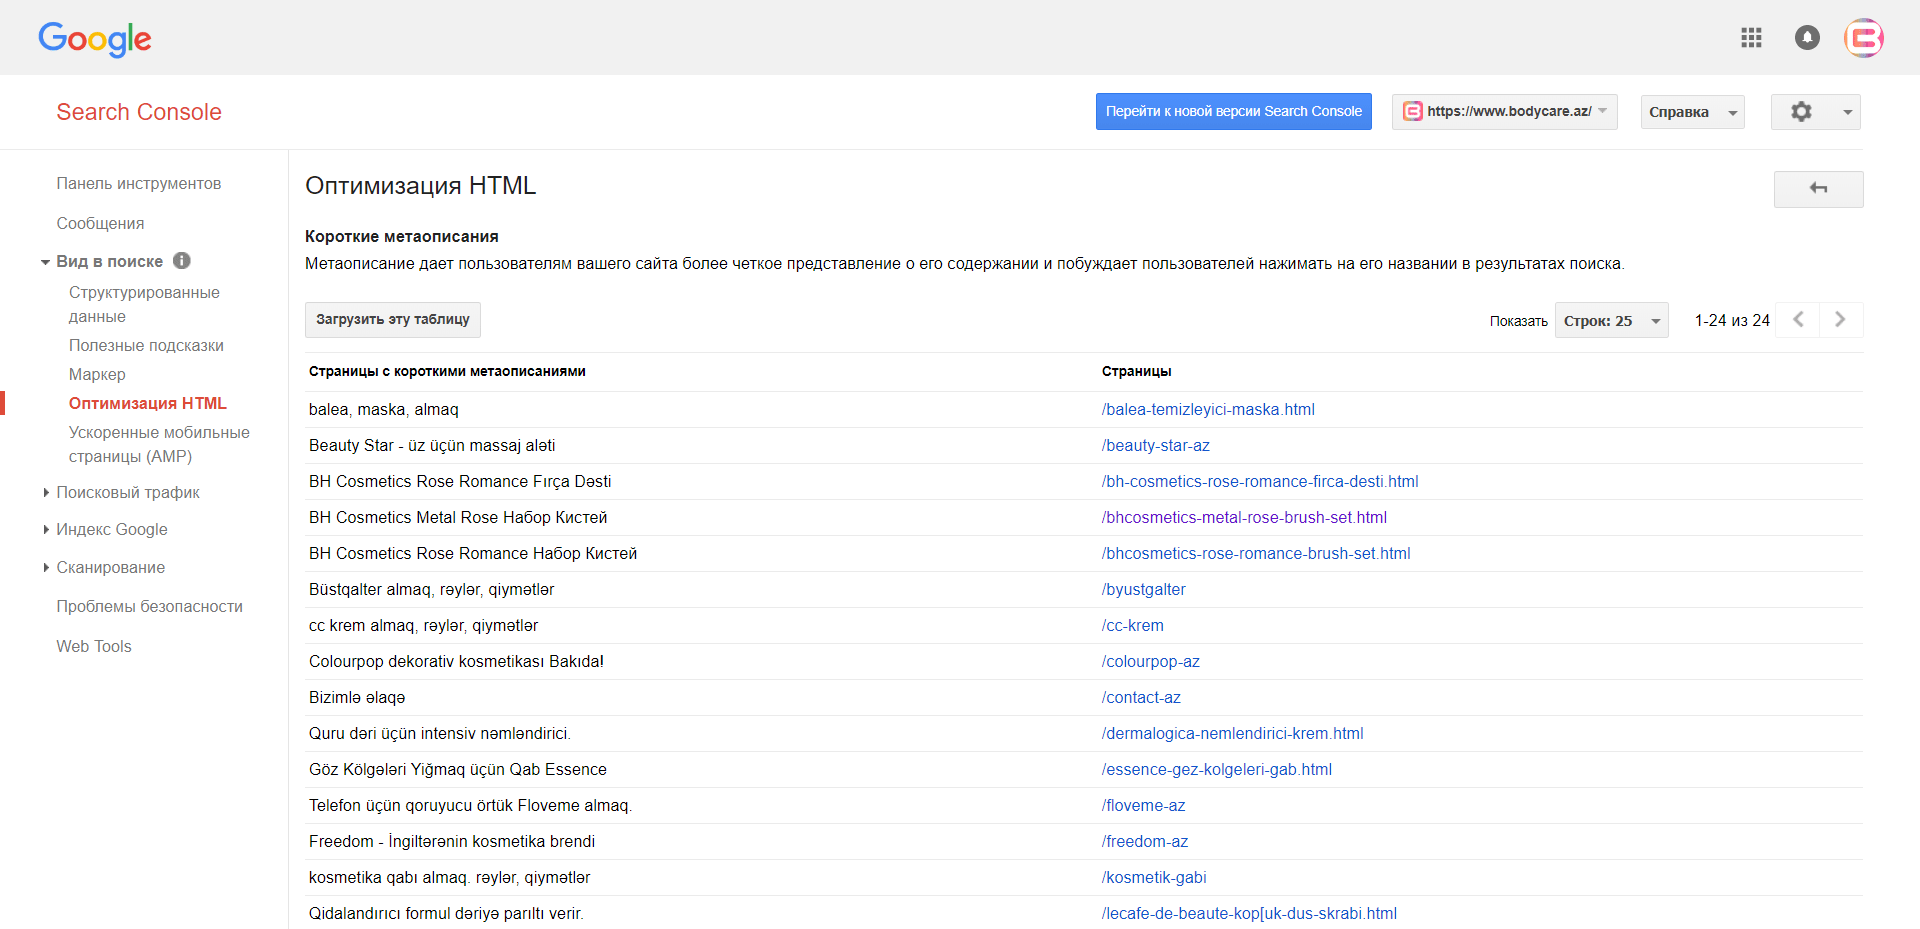 Google Search Console - Страницы с коротким Meta Description